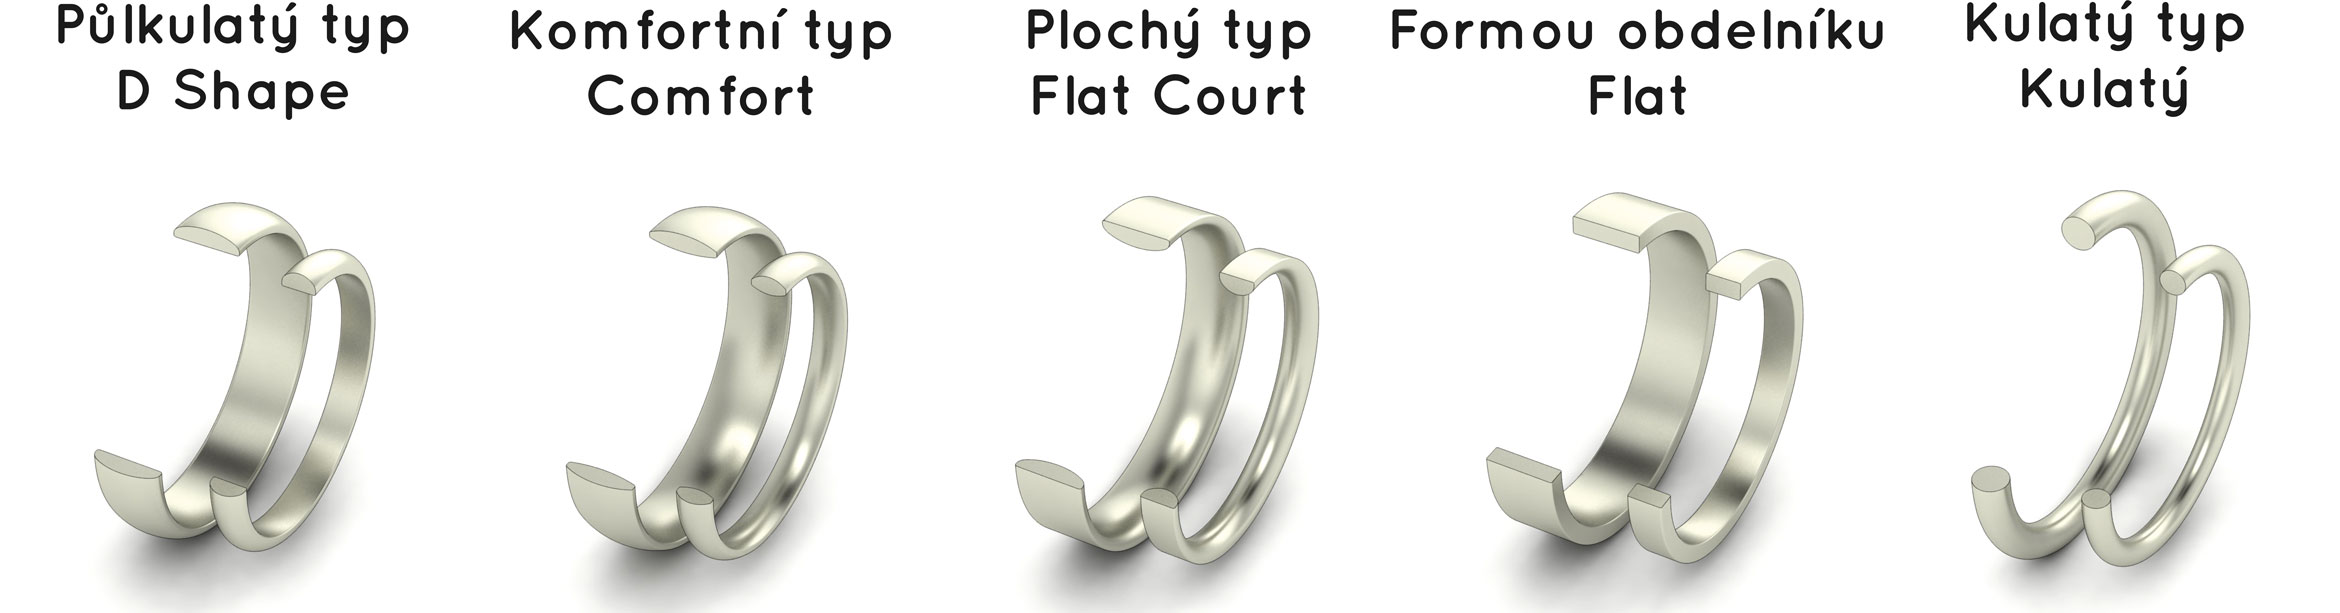 Profily snubních prstenů: Půlkulatý typ D Shape, Komfortní typ Comfort, Plochý typ Flat Court, Formou obdelníku Flat, Kulatý typ Kulatý